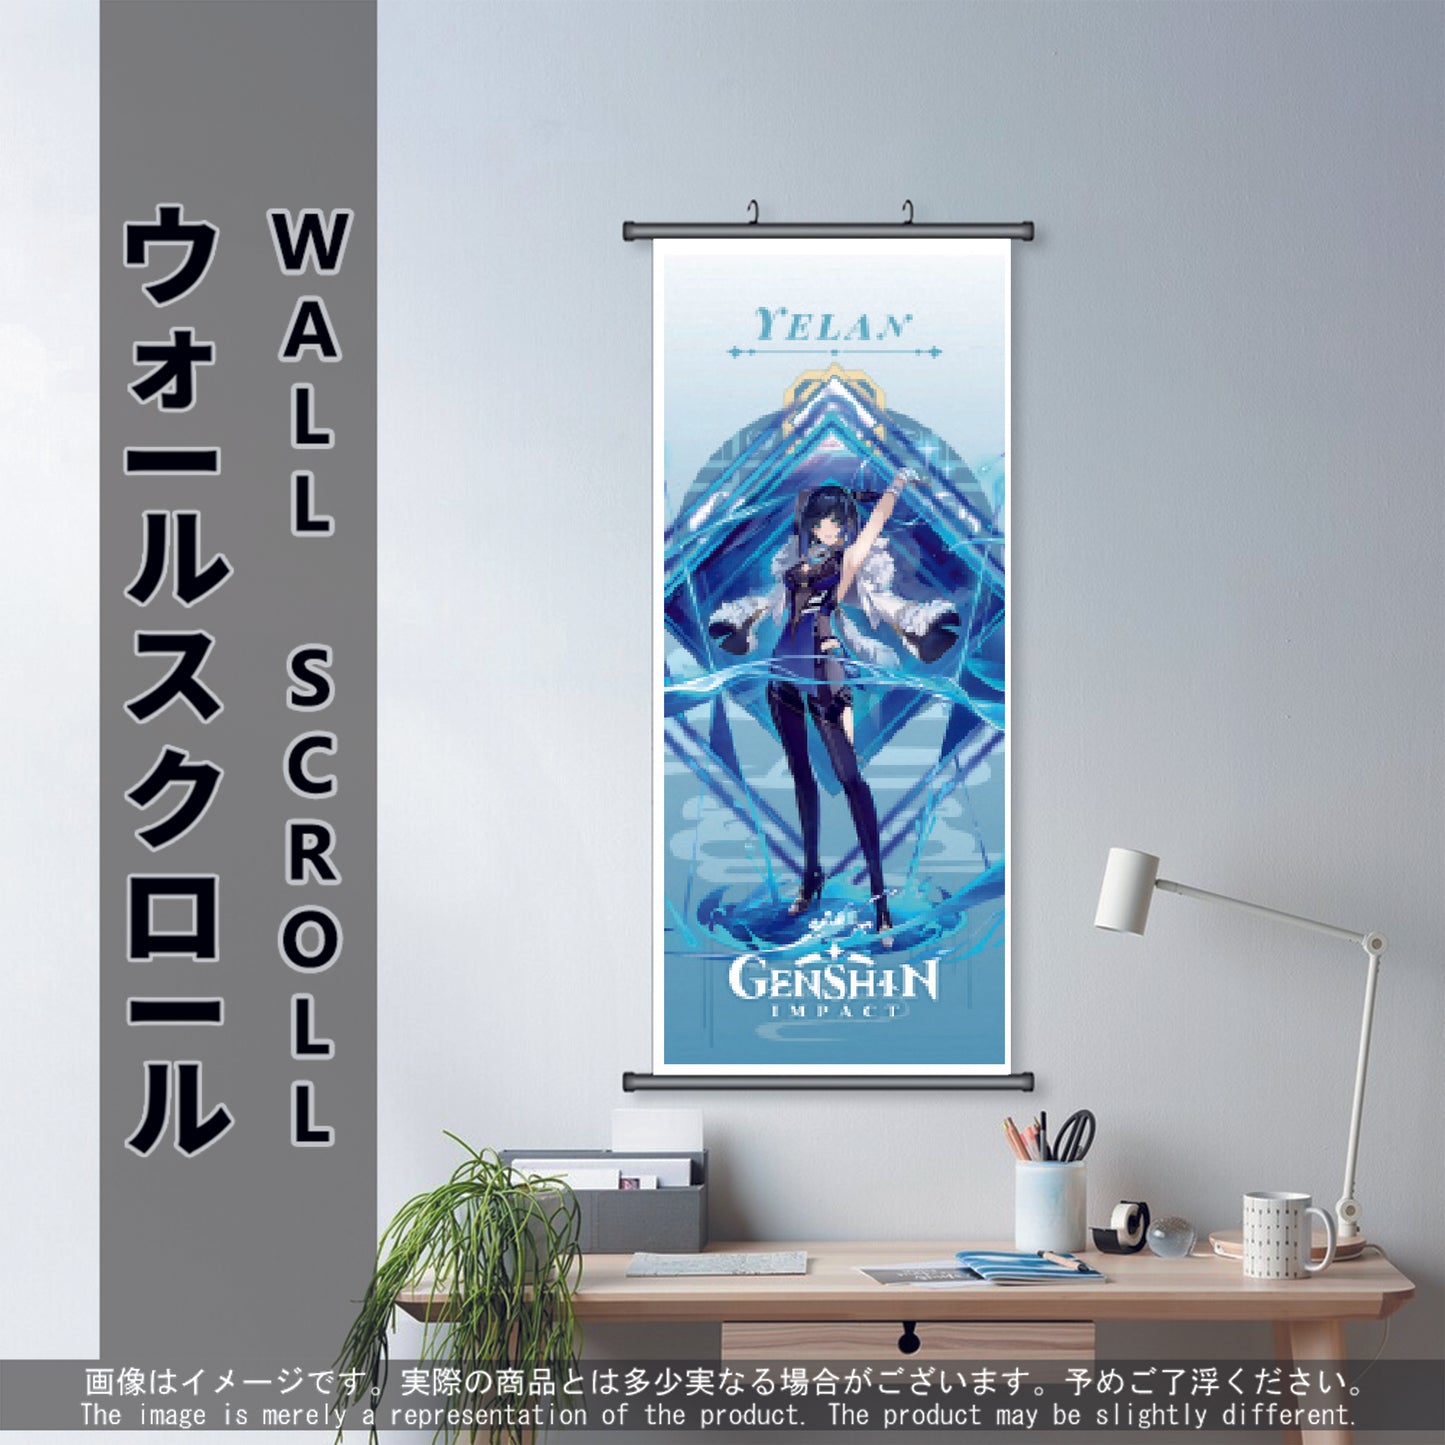 (GSN-HYDRO-05) YELAN Genshin Impact Anime Wall Scroll